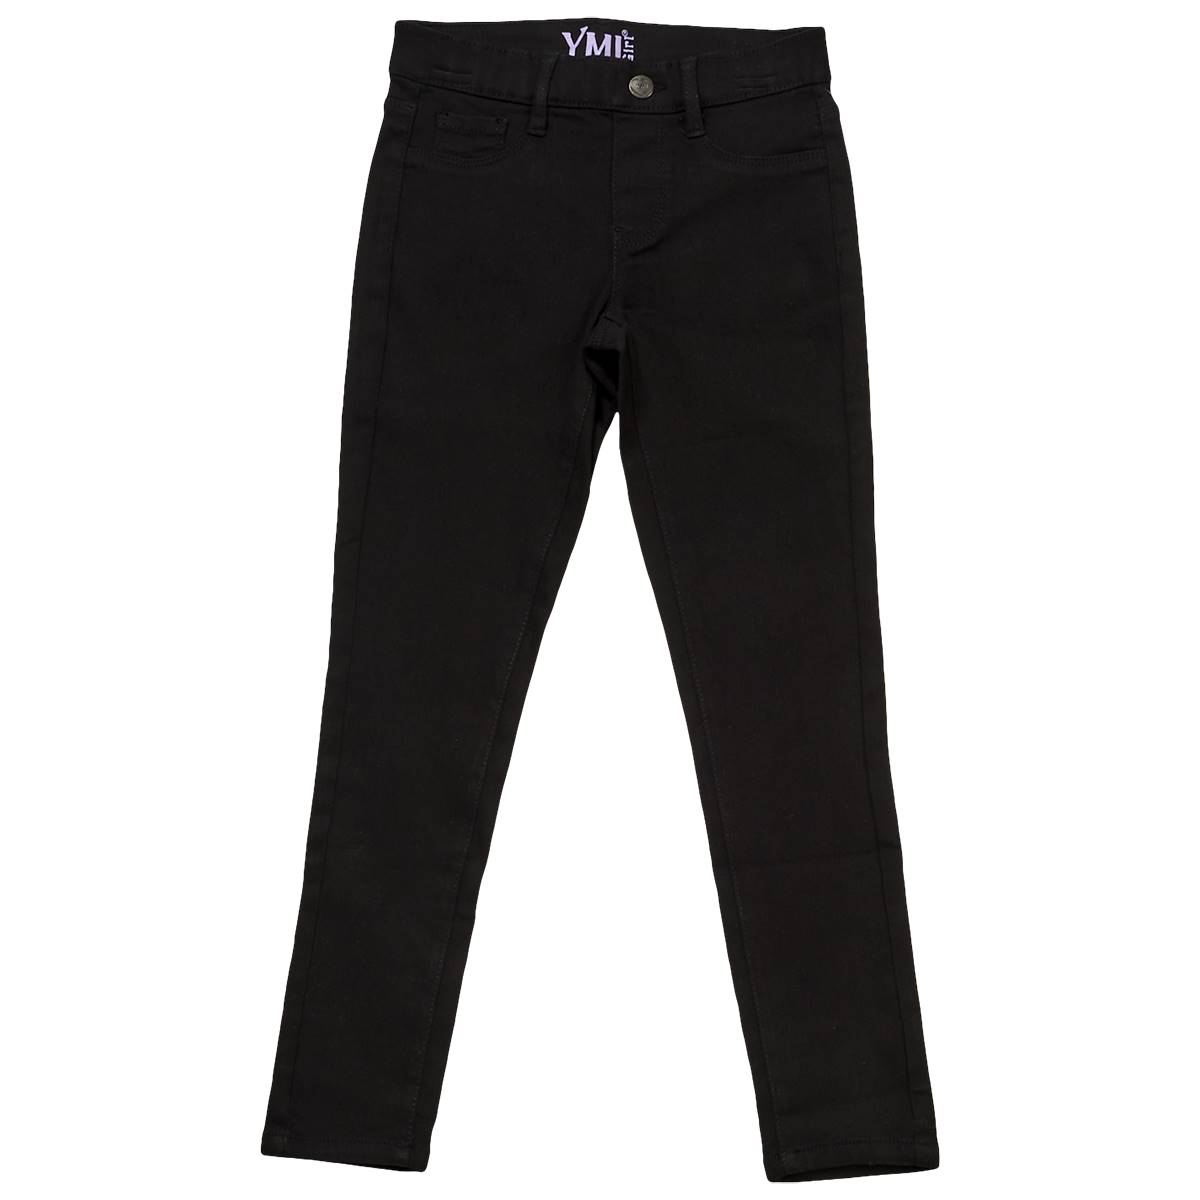 Girls (7-14) YMI(R) Pull On Skinny Jeans